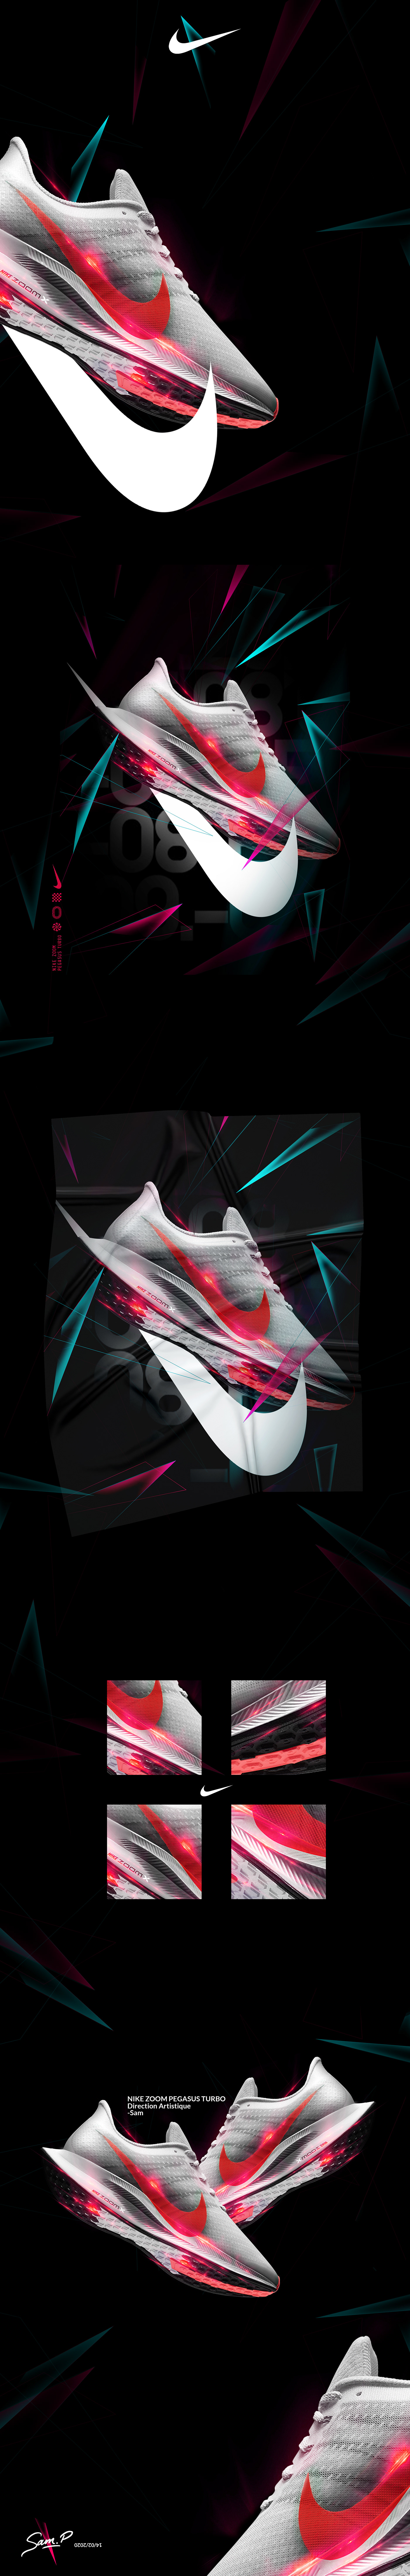 art art direction  design direction artistique Fashion  graphisme Nike poster shoes sneakers